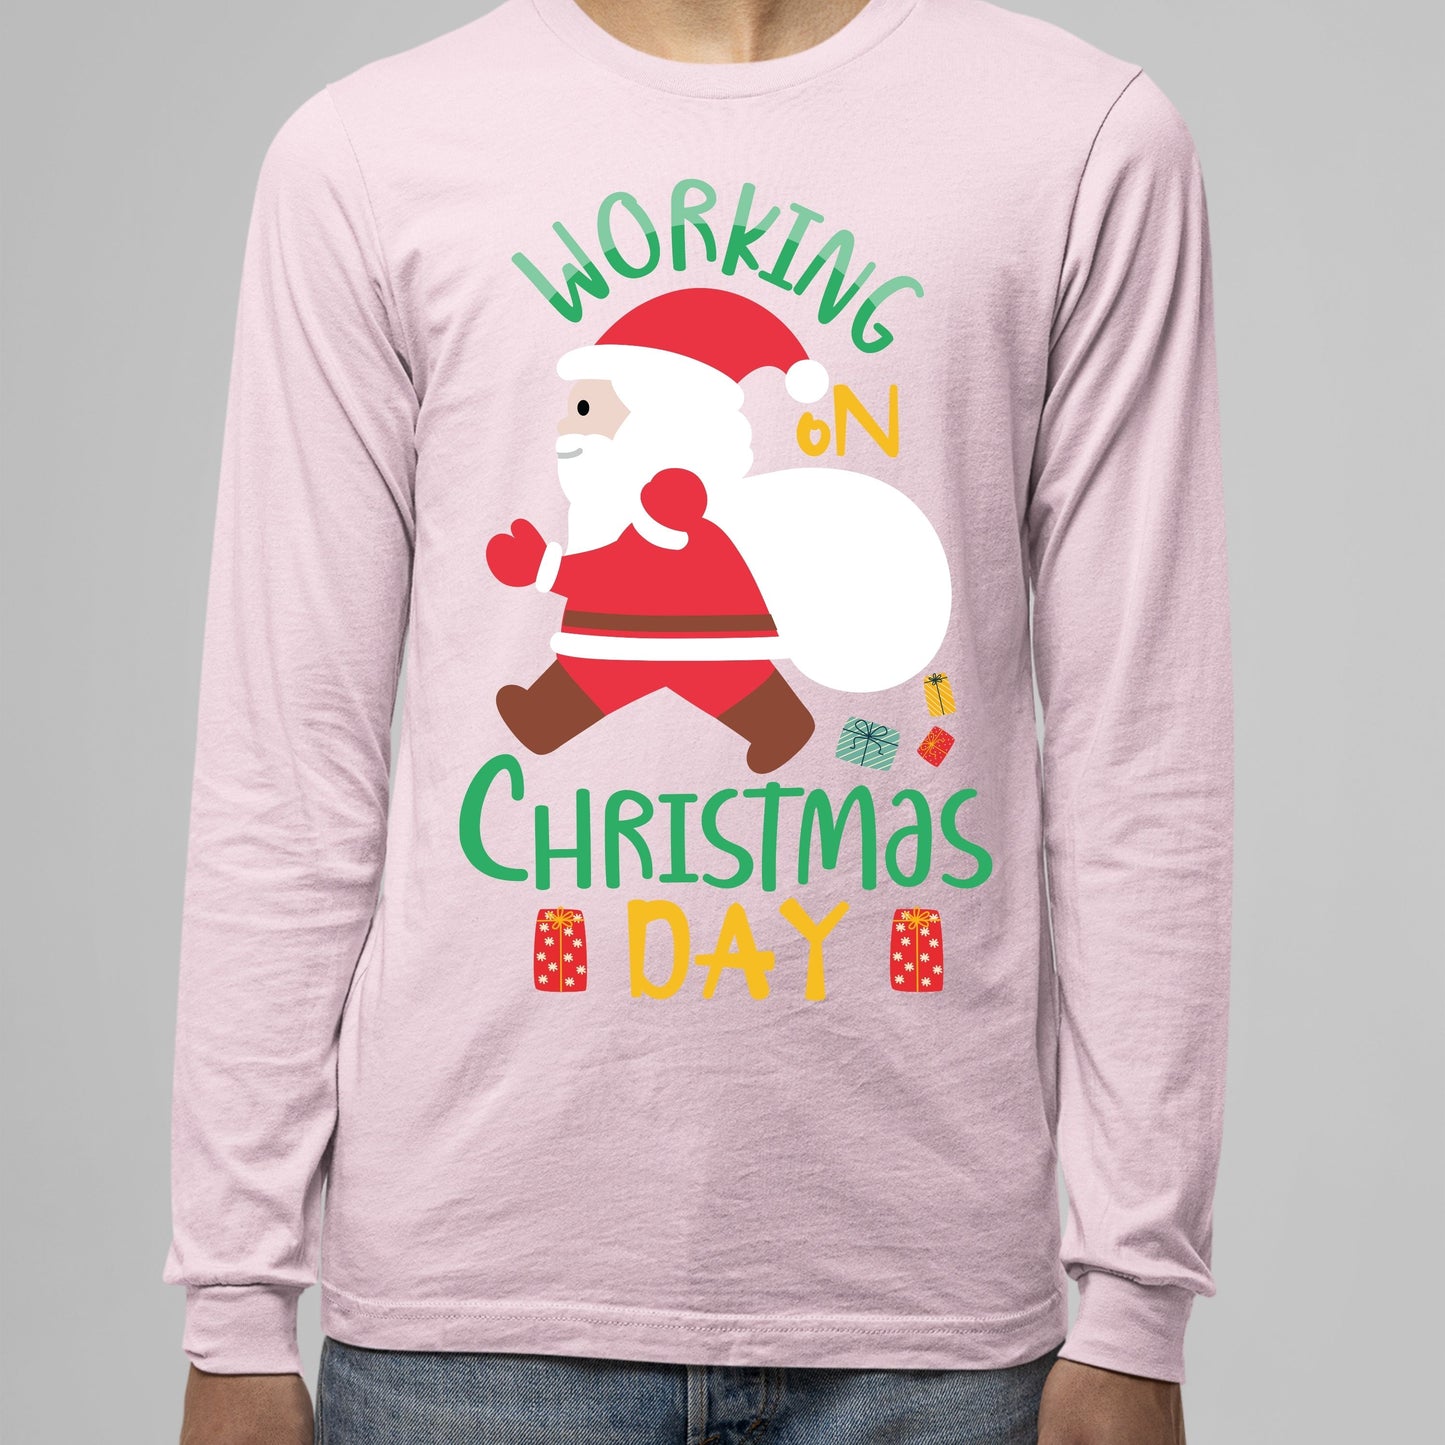 Working on Chirstmas day , Christmas Crewneck For Men, Christmas Long Sleeves, Christmas Sweater, Christmas Sweatshirt, Christmas Present